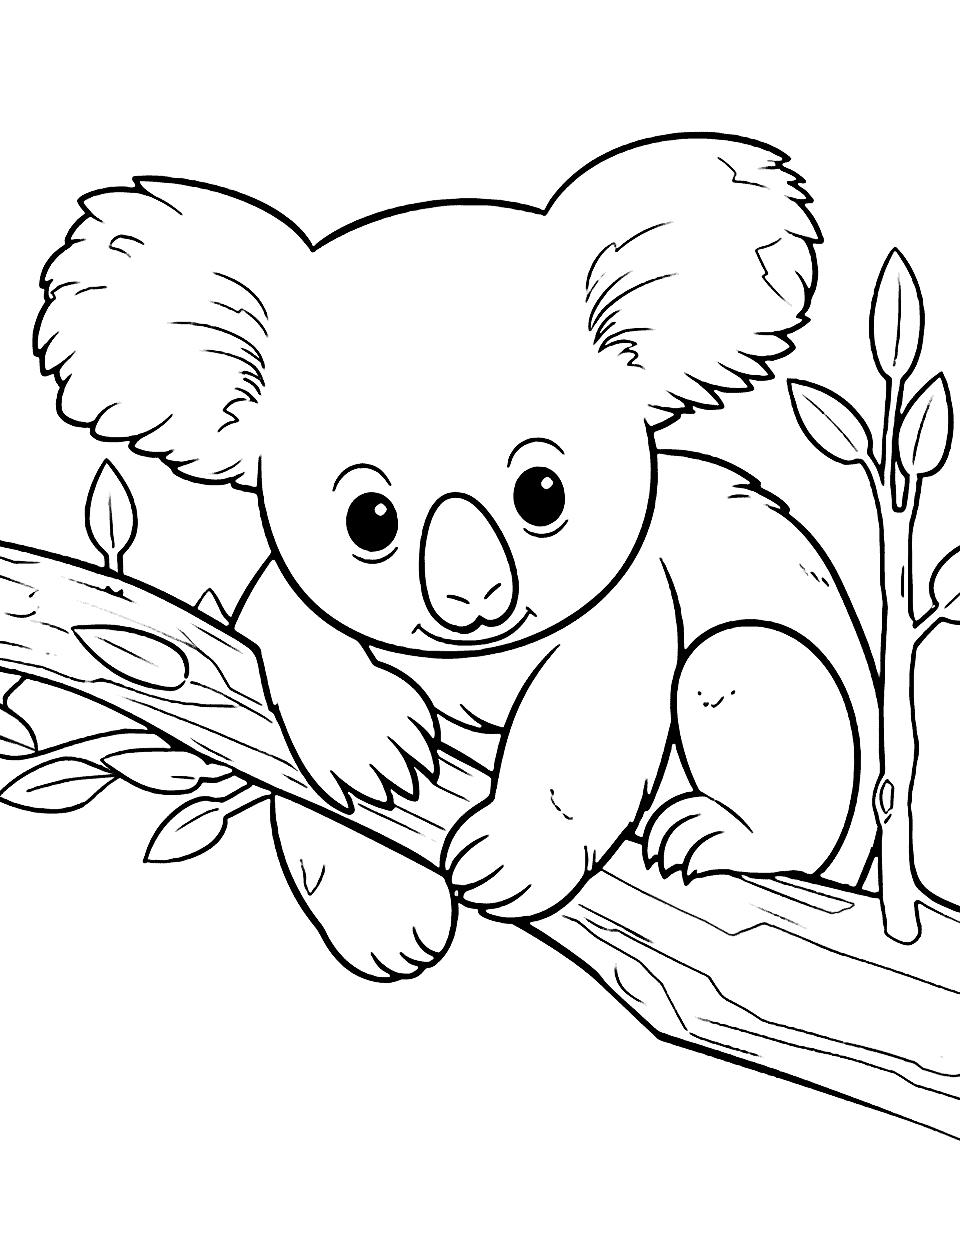 Koala Sleeping on a Tree Cute Coloring Page - A cute koala cuddled up and sleeping on a eucalyptus tree branch.